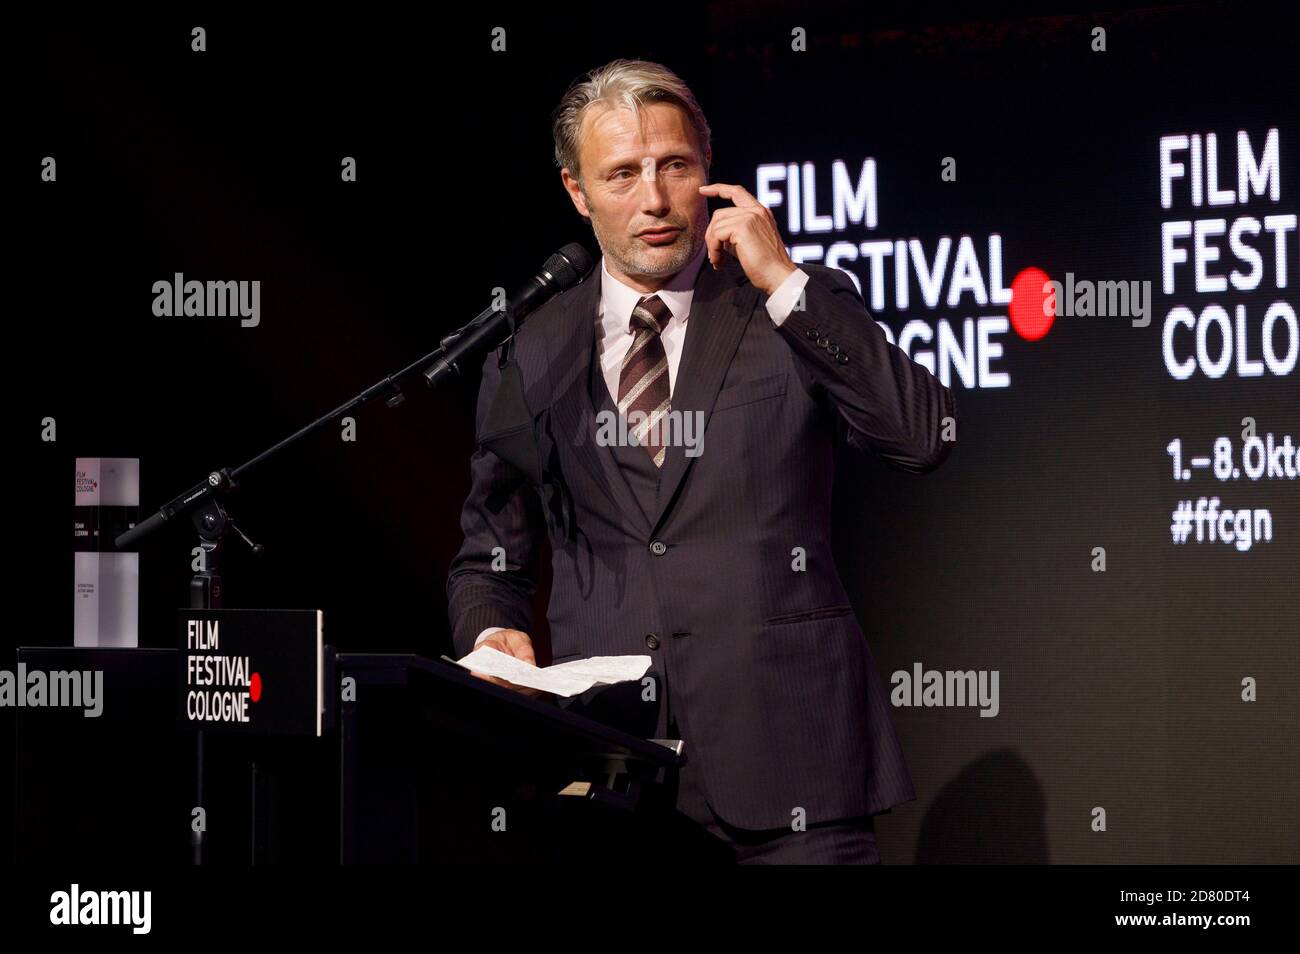 Mads Mikkelsen partecipa al Film Festival Cologne Awards 2020 al 30° Film Festival Cologne 2020 a Palladium l'8 ottobre 2020 a Colonia, Germania Foto Stock